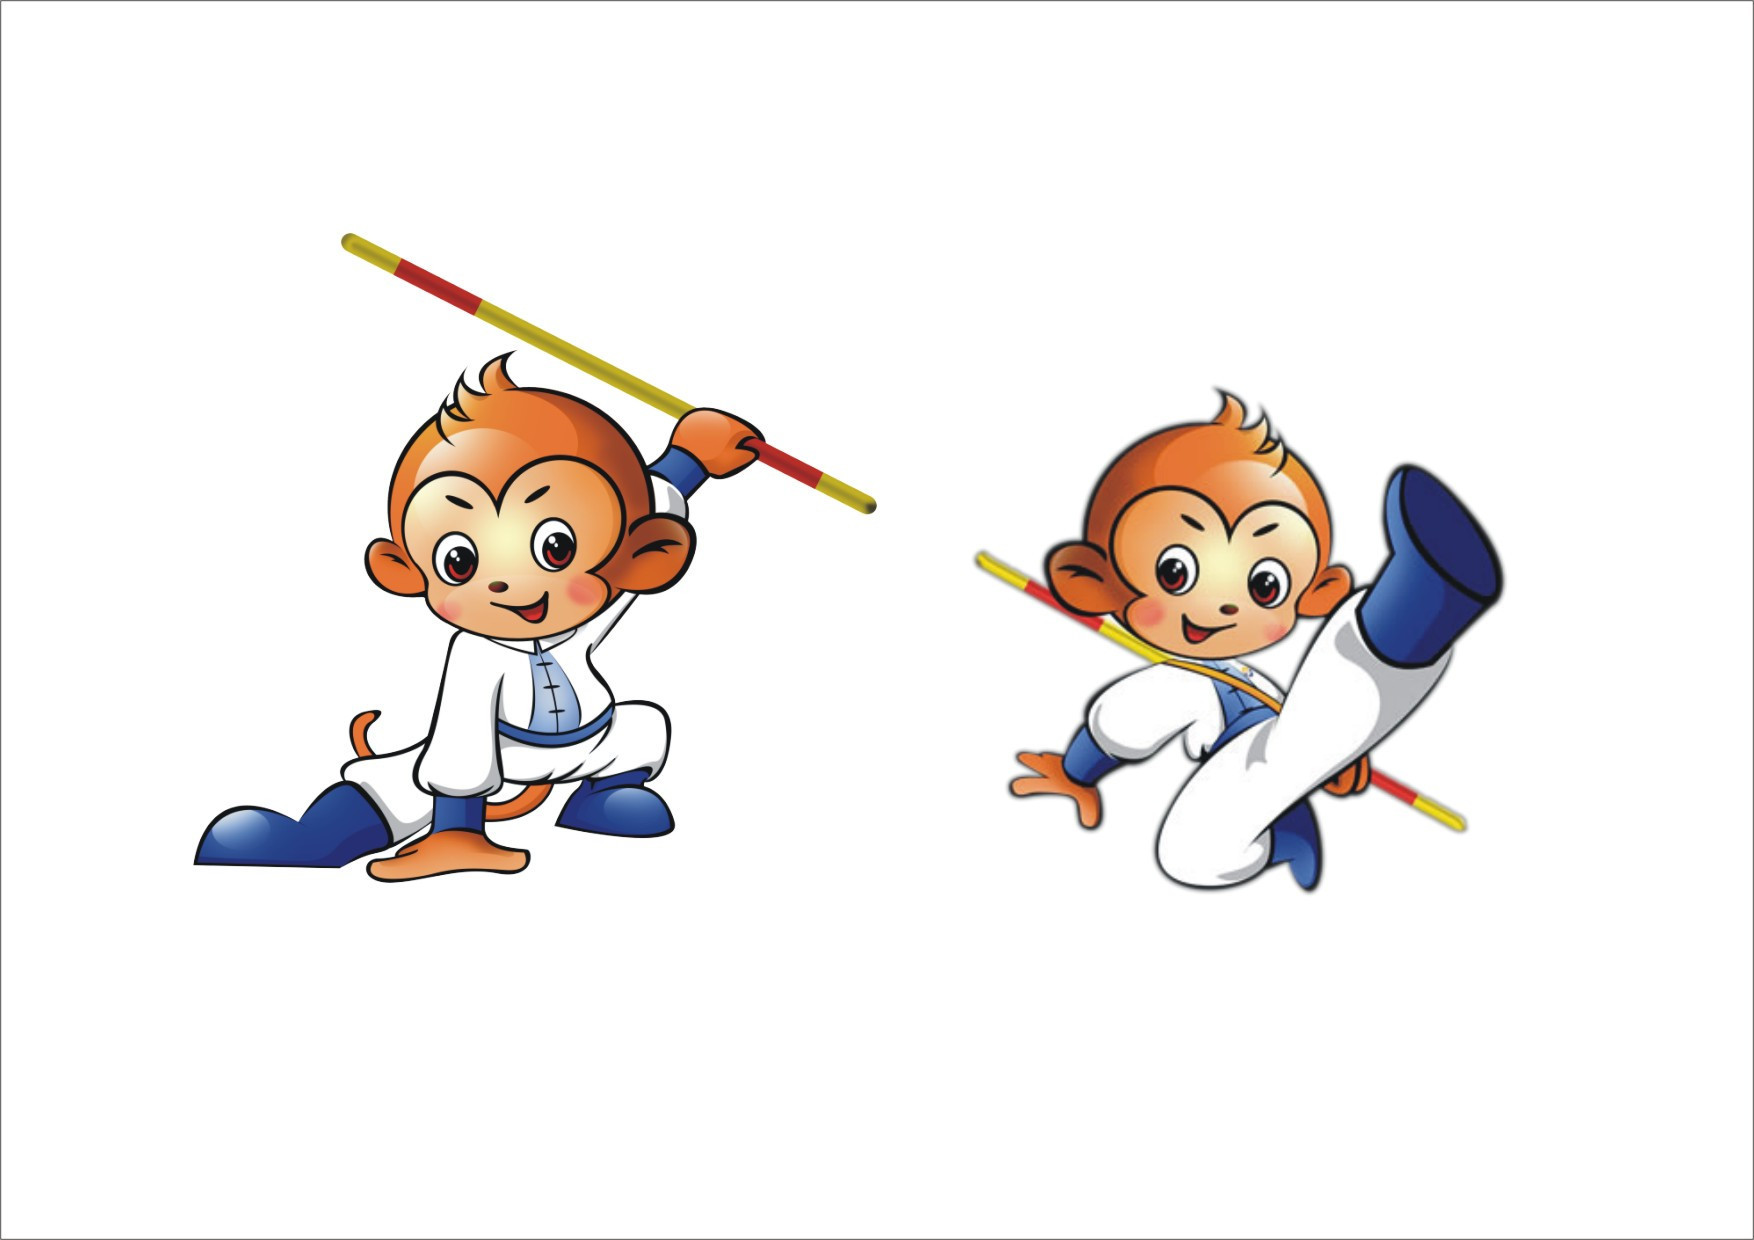 Spirit monkey Lele is the mascot for the 2017 World Kung-fu Championships ©International Wushu Federation